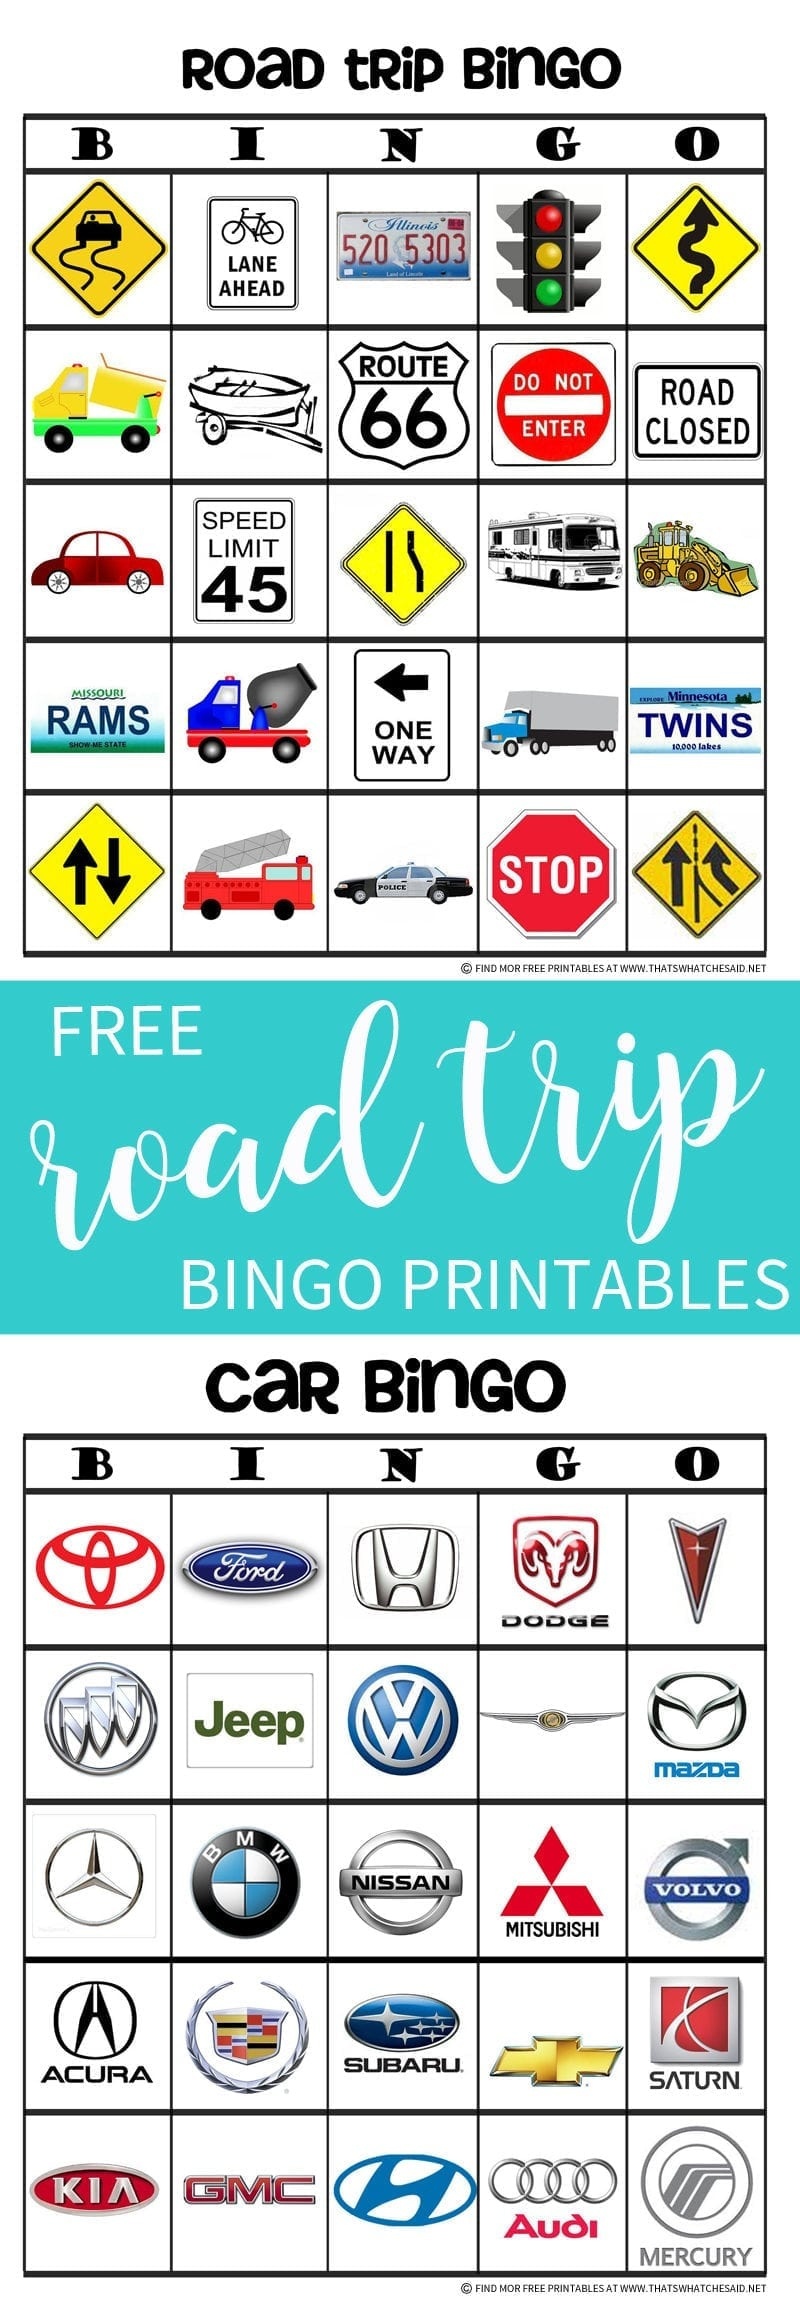 Road Trip Bingo Game Free Printable - That's What Che Said - Free Printable Car Bingo